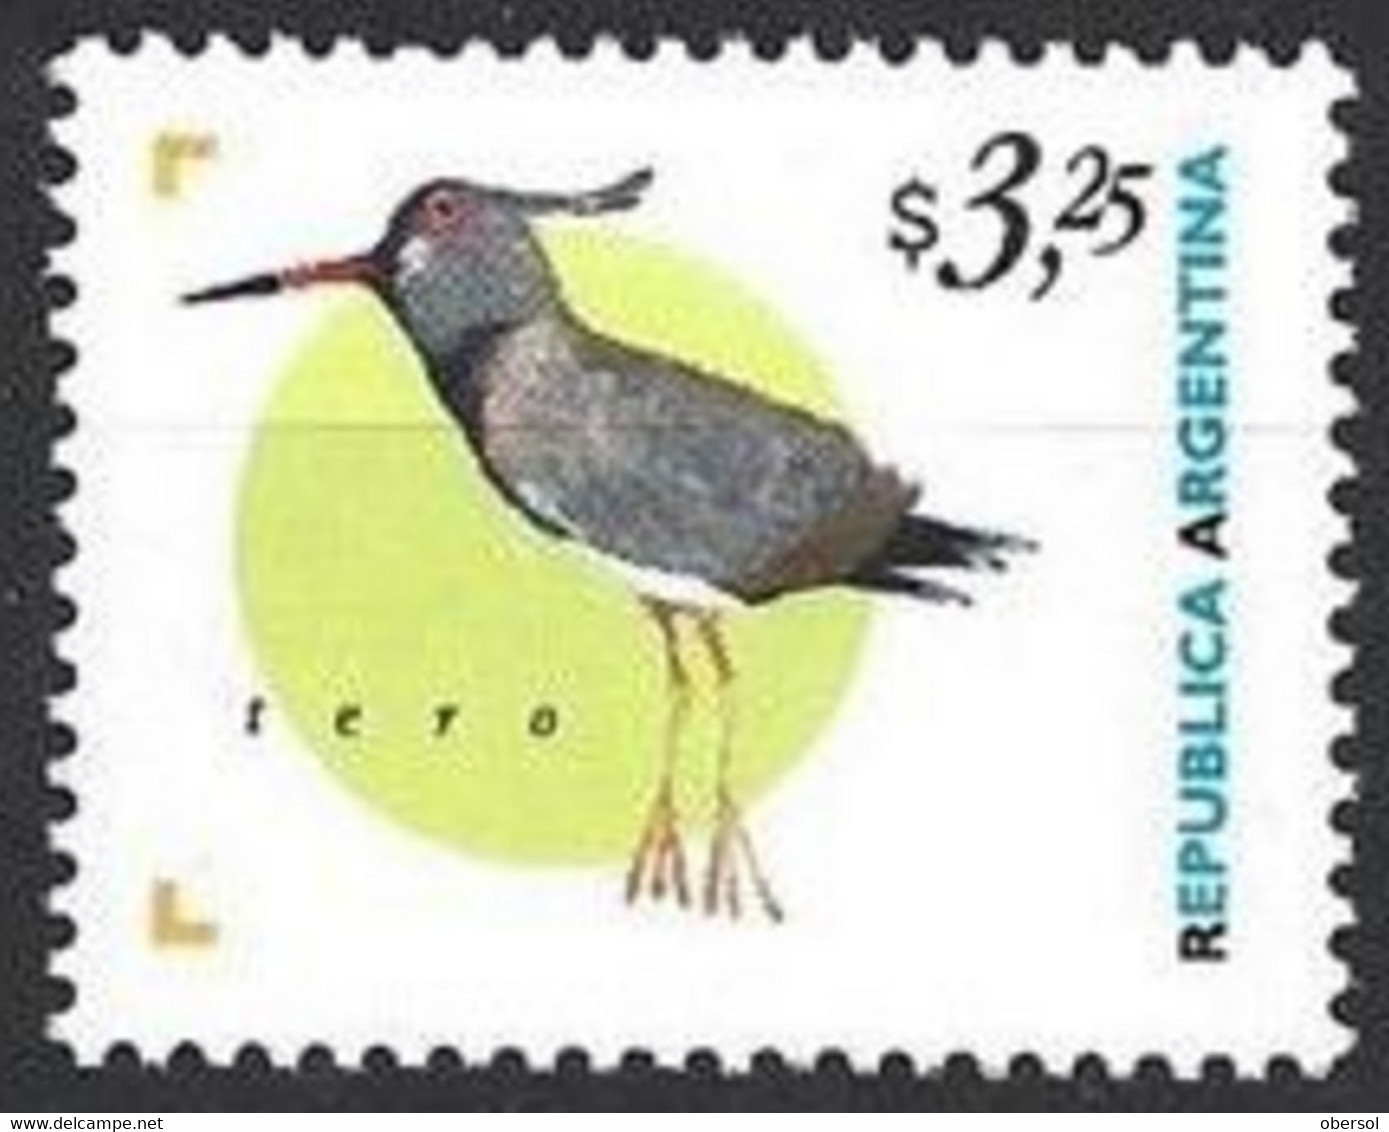 Argentina 1998 Permanent/Definitives Tero Bird Stamp White Gum MNH Stamp - Unused Stamps